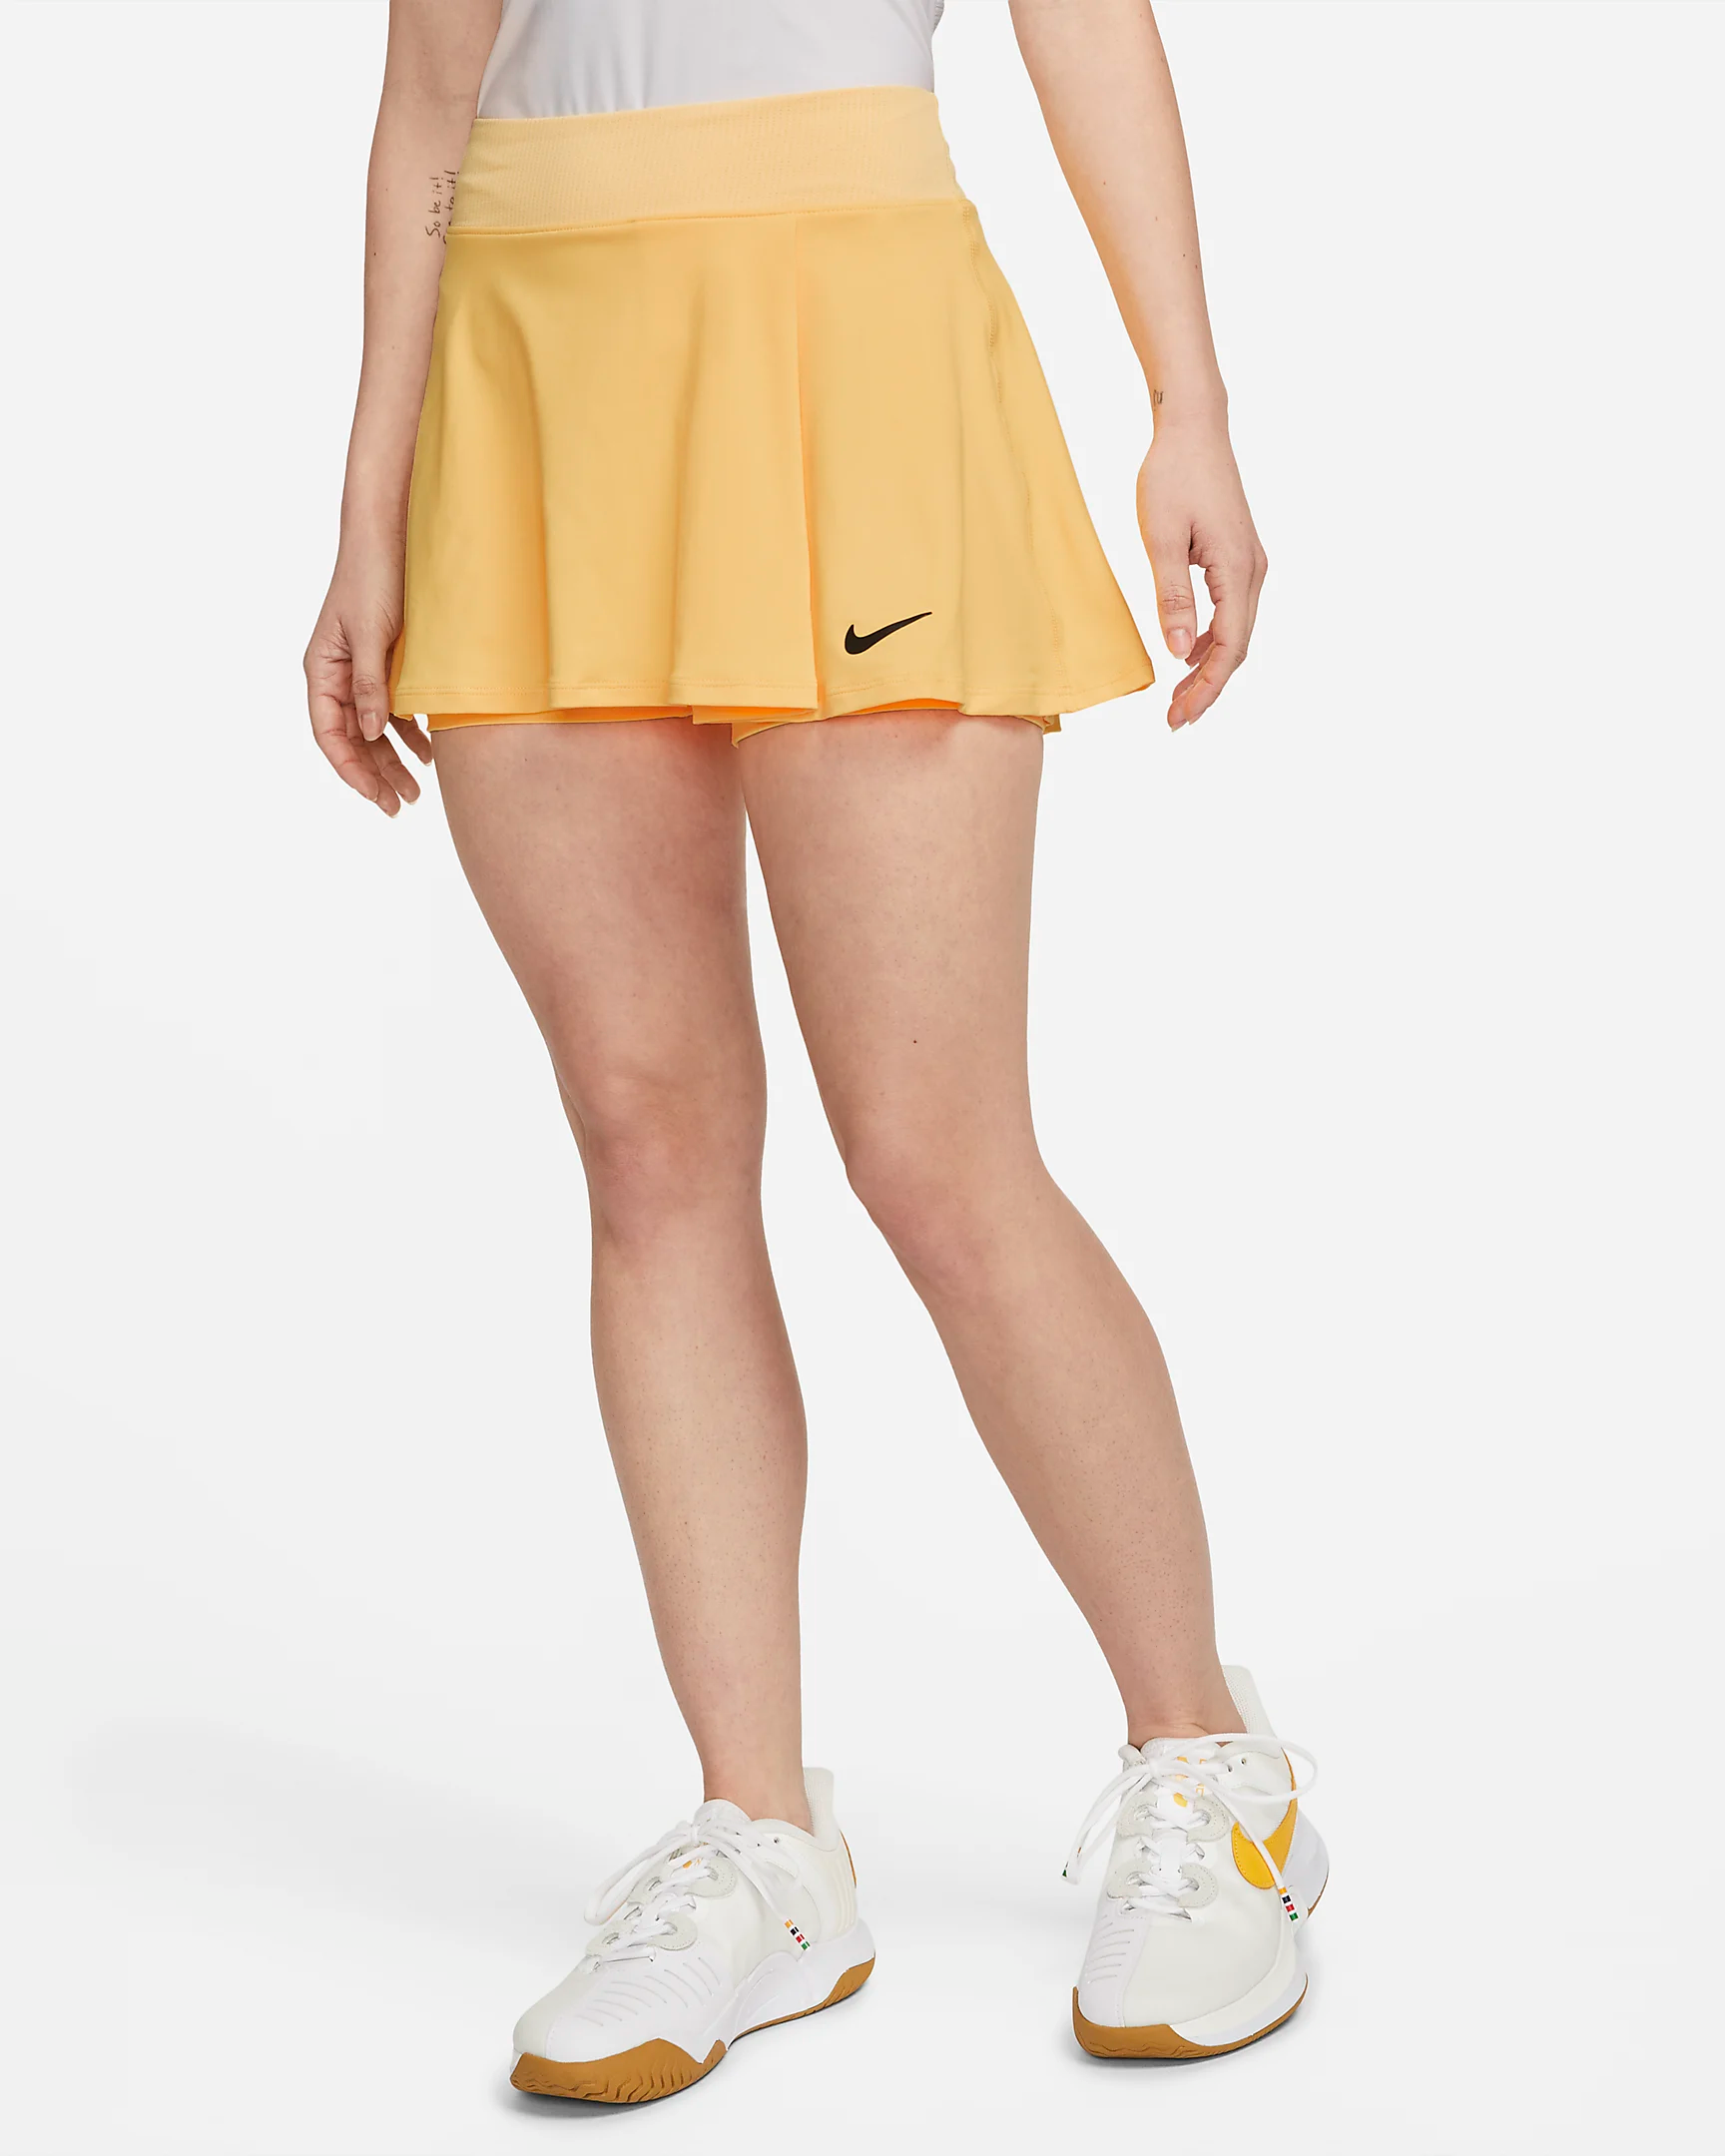 NikeCourt + Women’s Flouncy Skirt